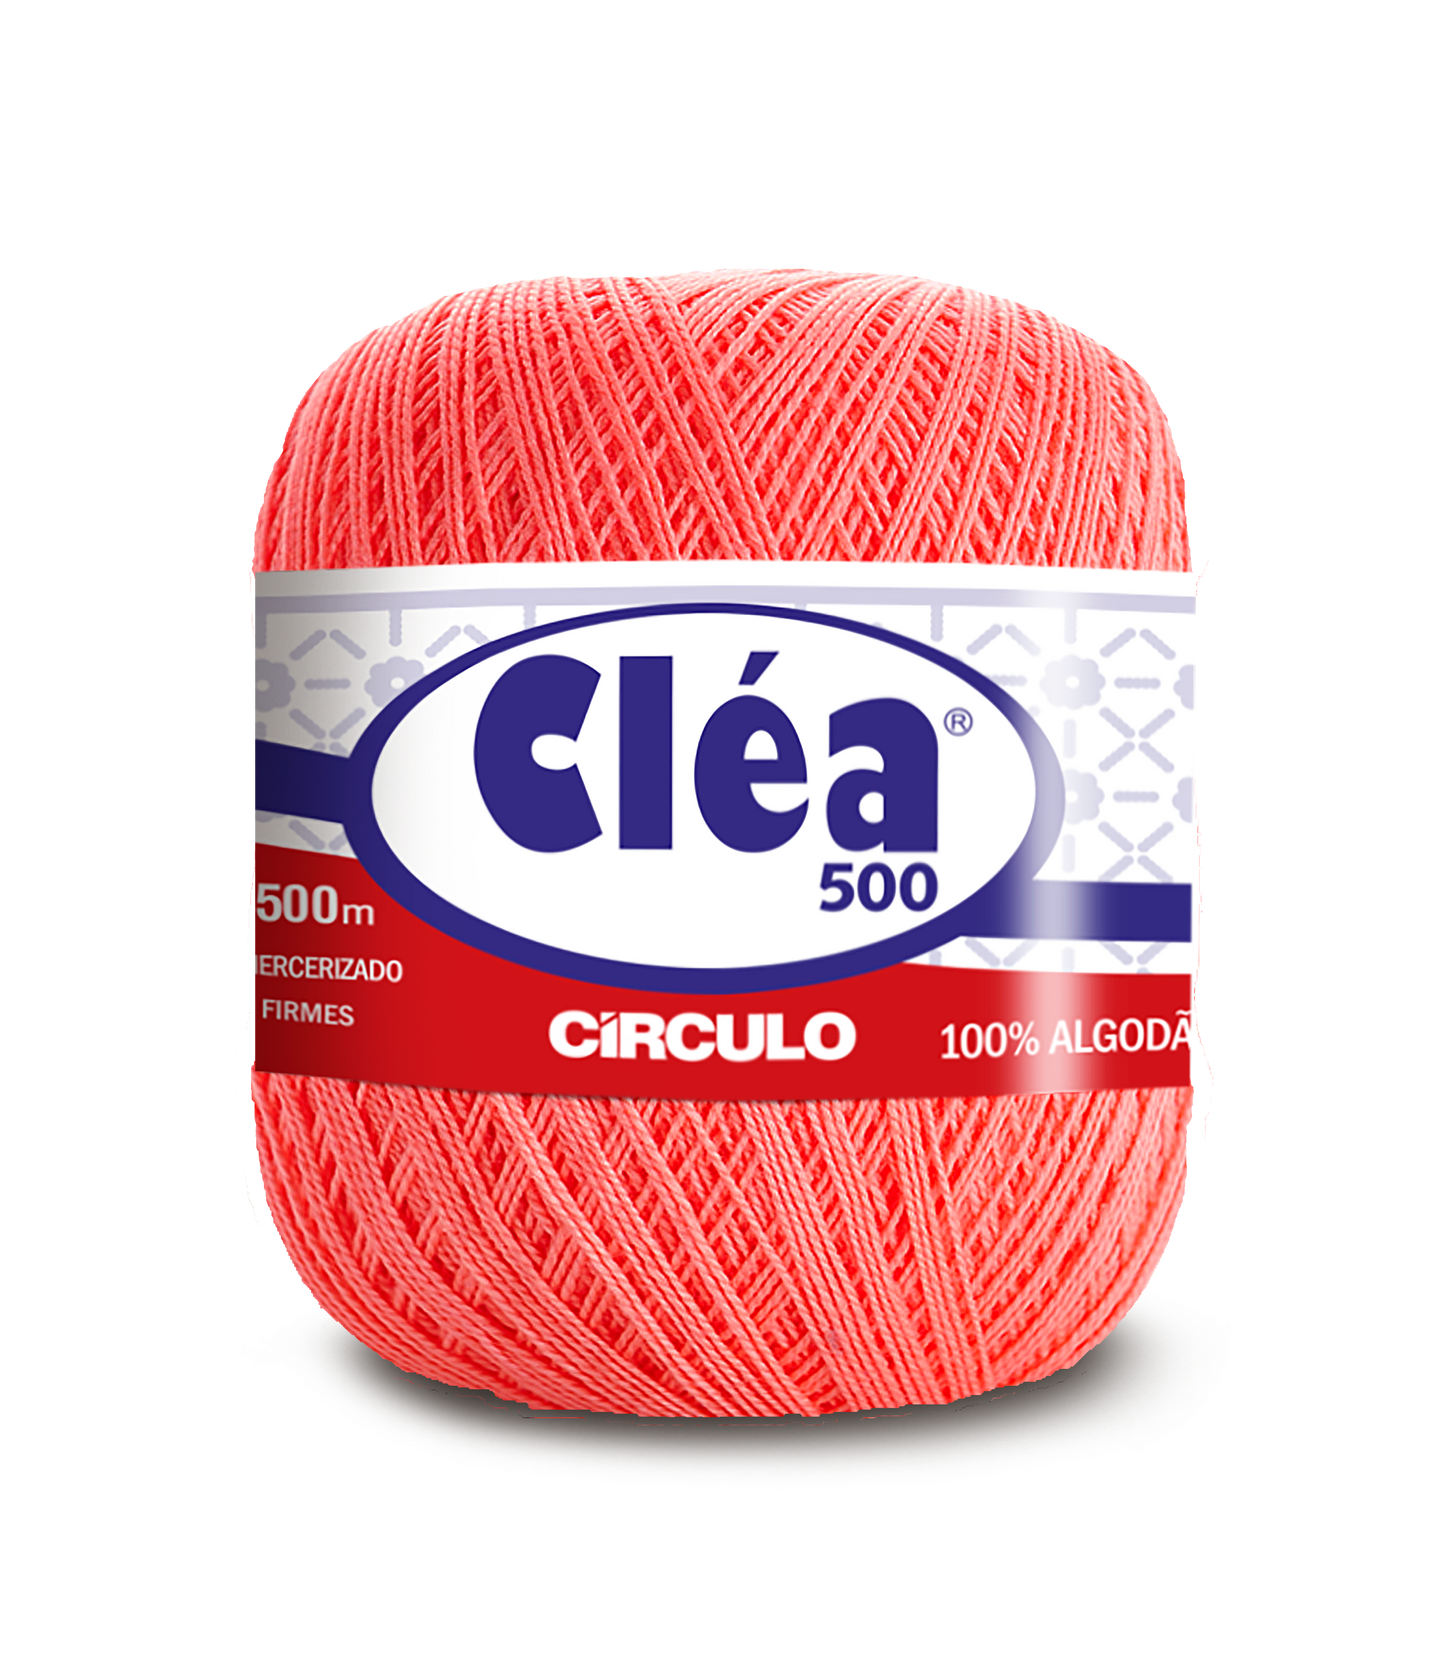 Circulo Clea 500 m 75 gr, 100% Mercerized Cotton Yarn (246042)